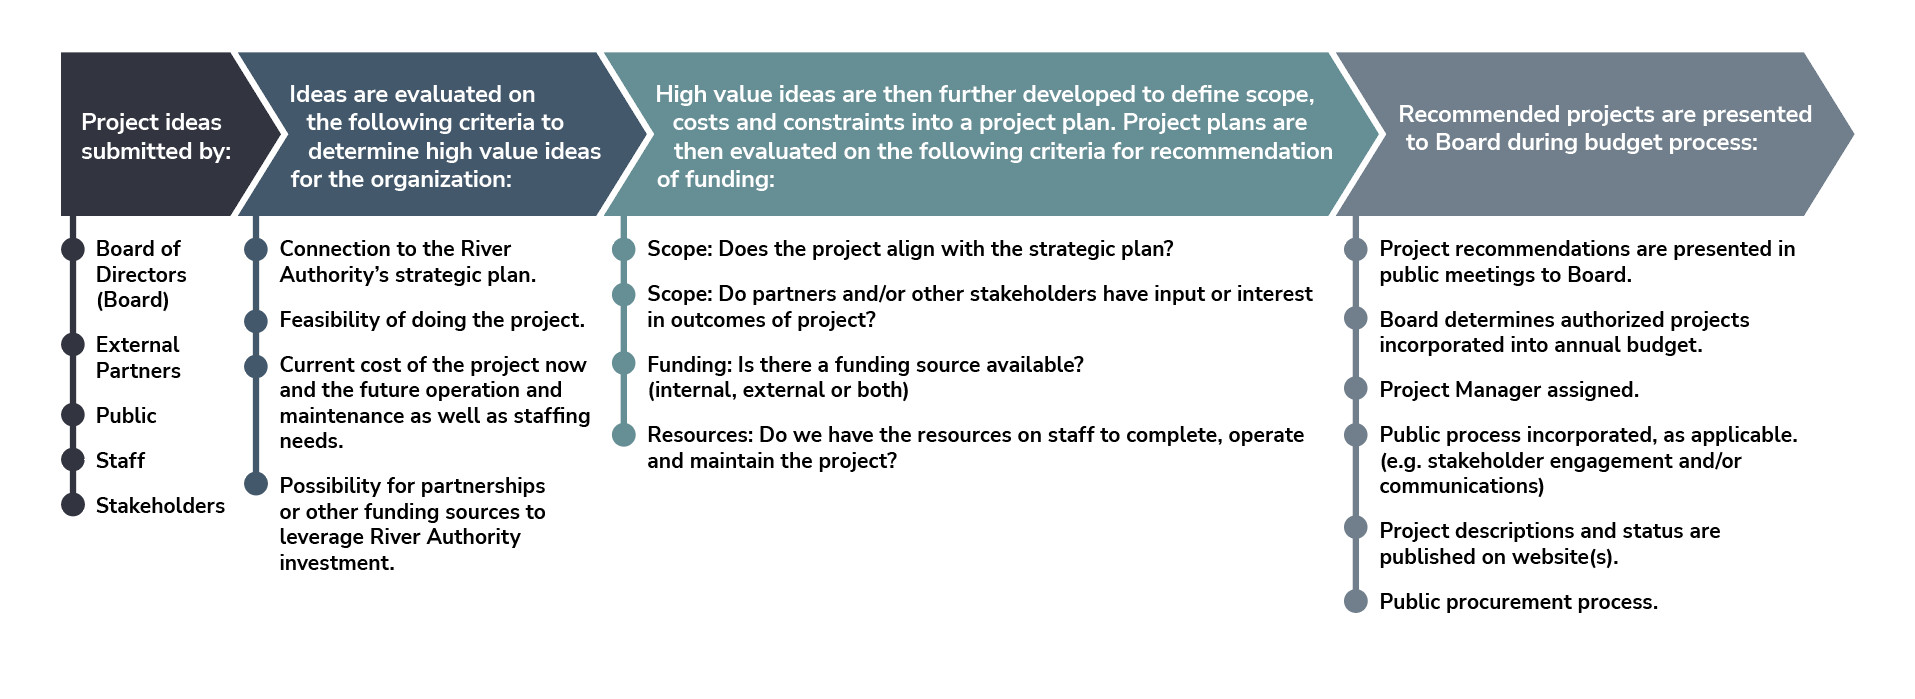 Project Process Flowchart